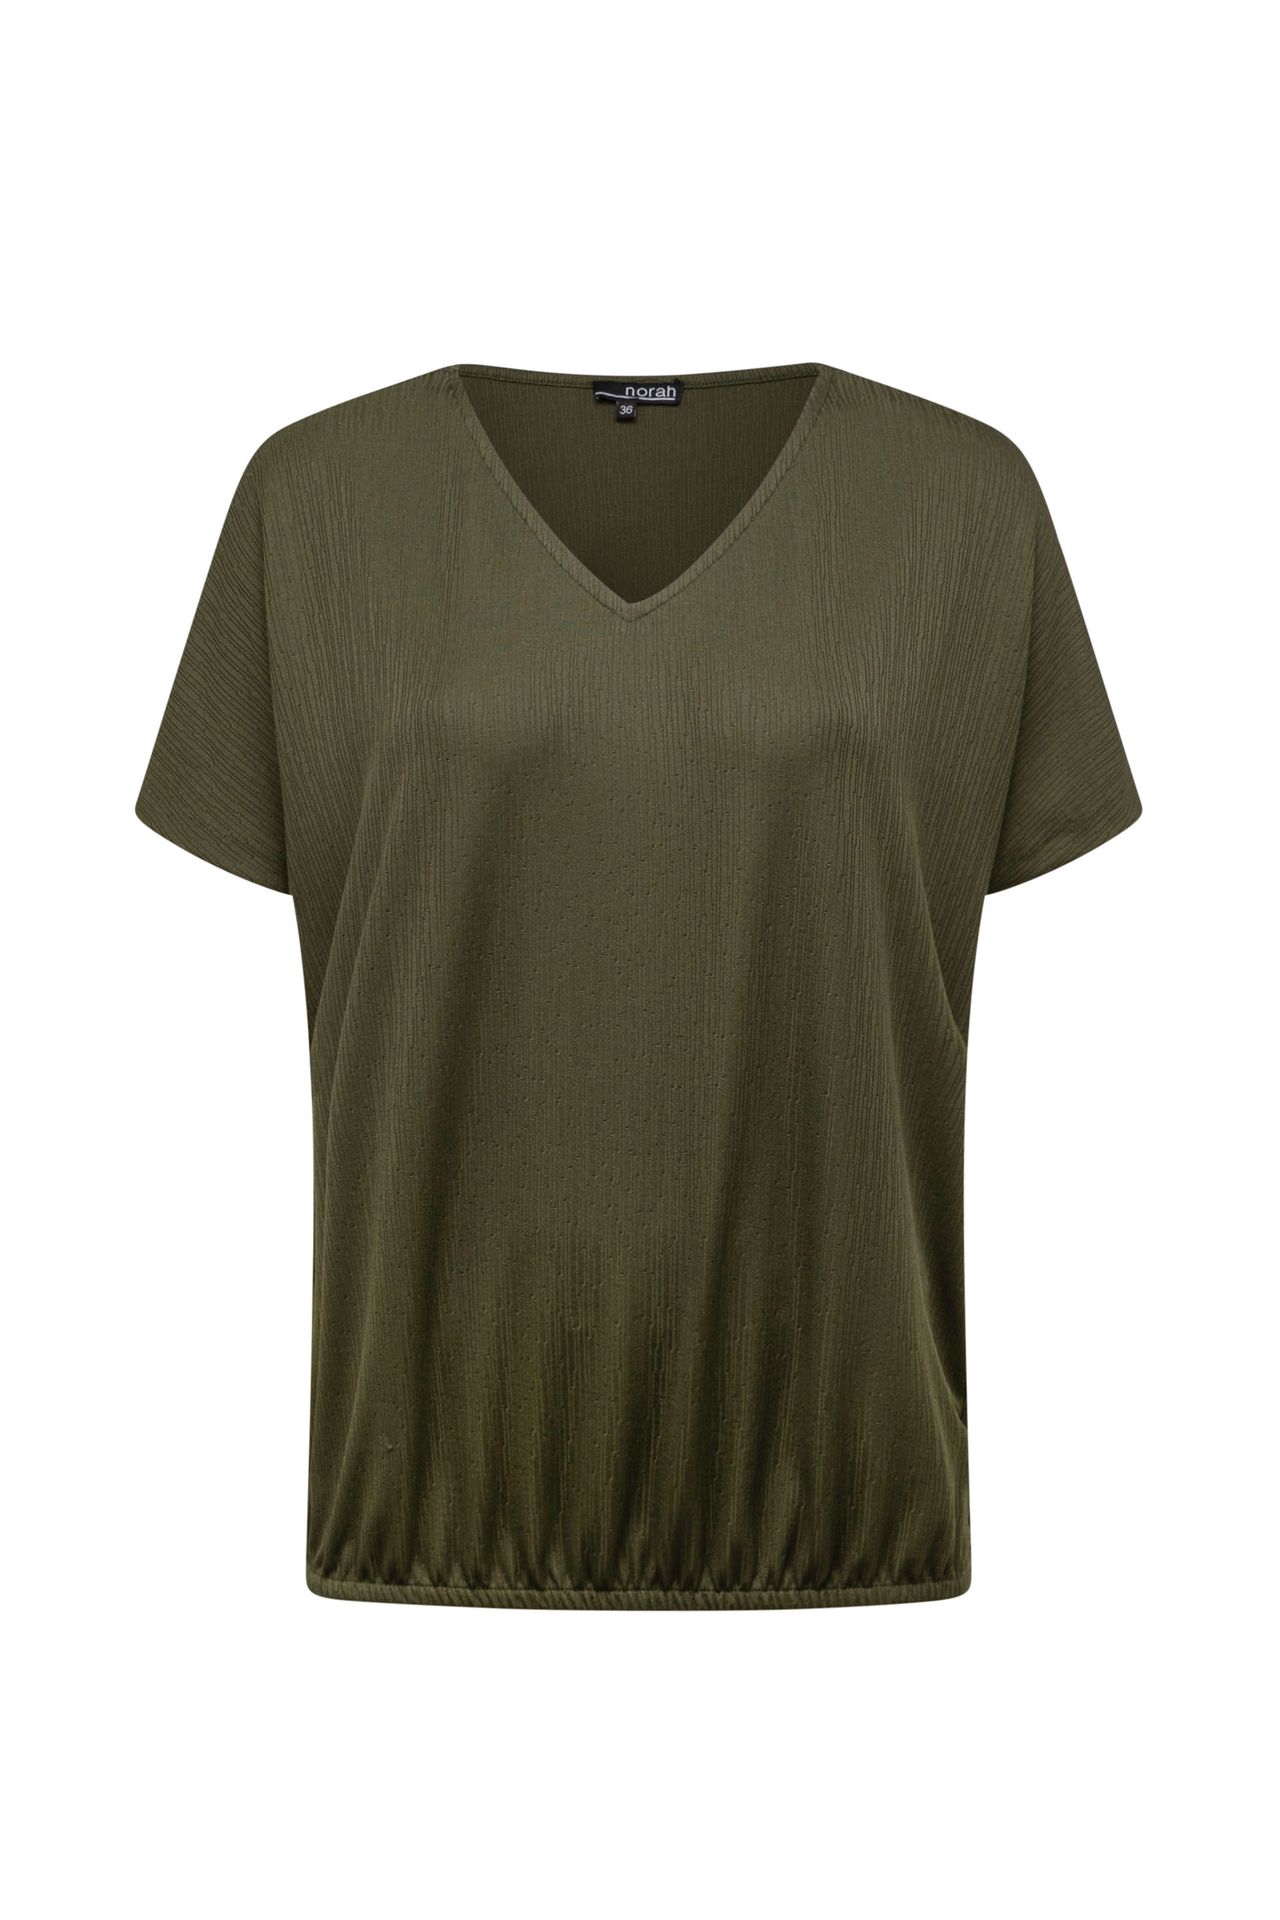 Norah Legergroen shirt dark army 211648-580